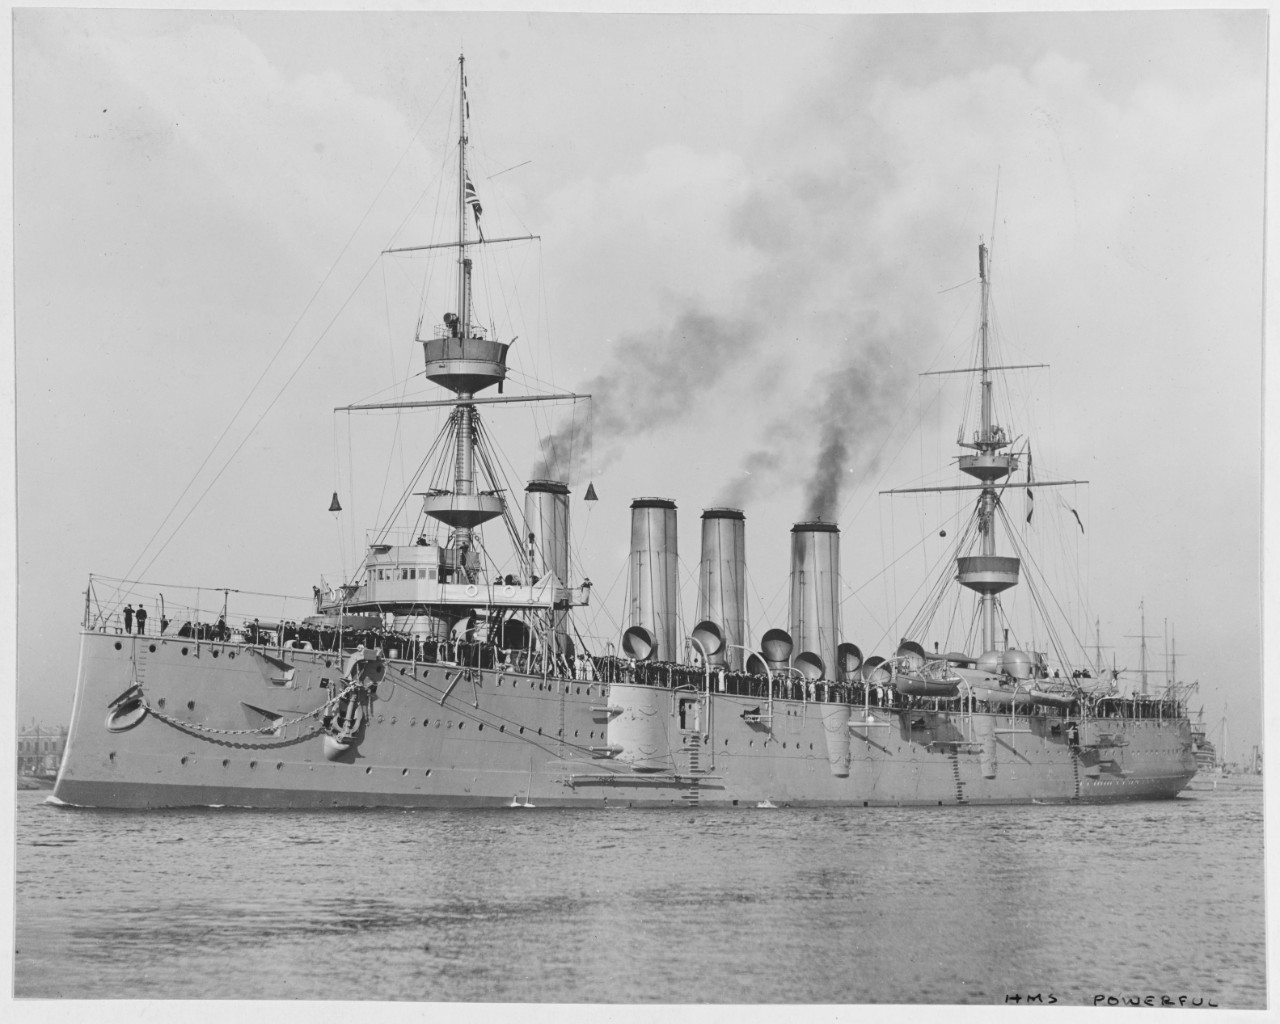 HMS POWERFUL (British cruiser, 1895)